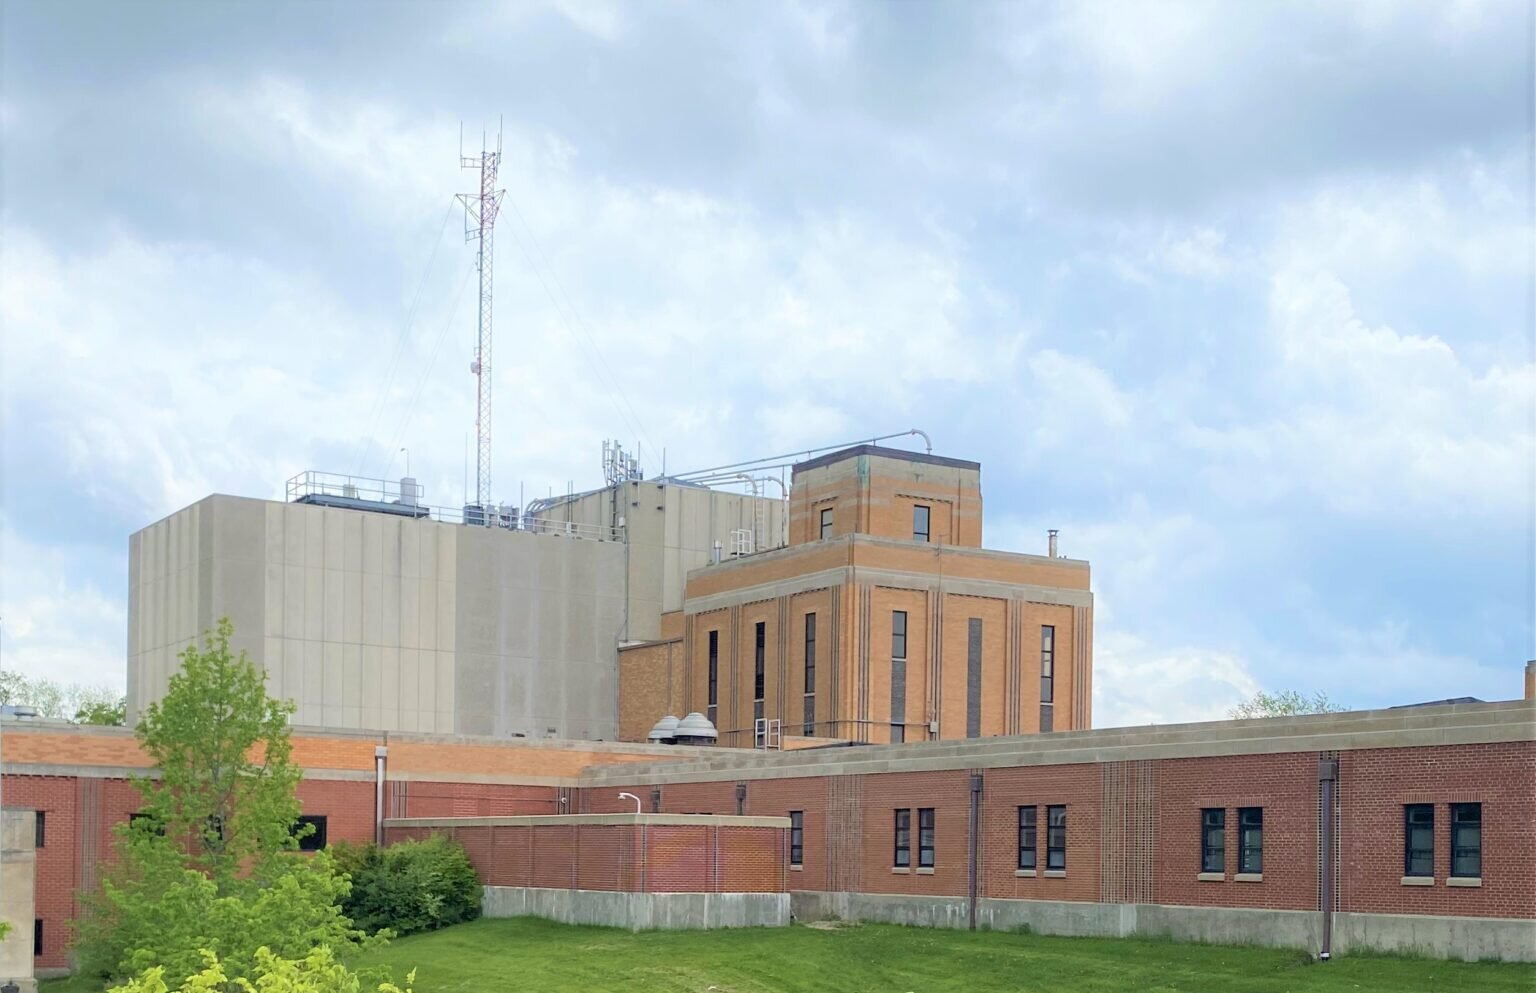 Ann Arbor's water treatment plant.